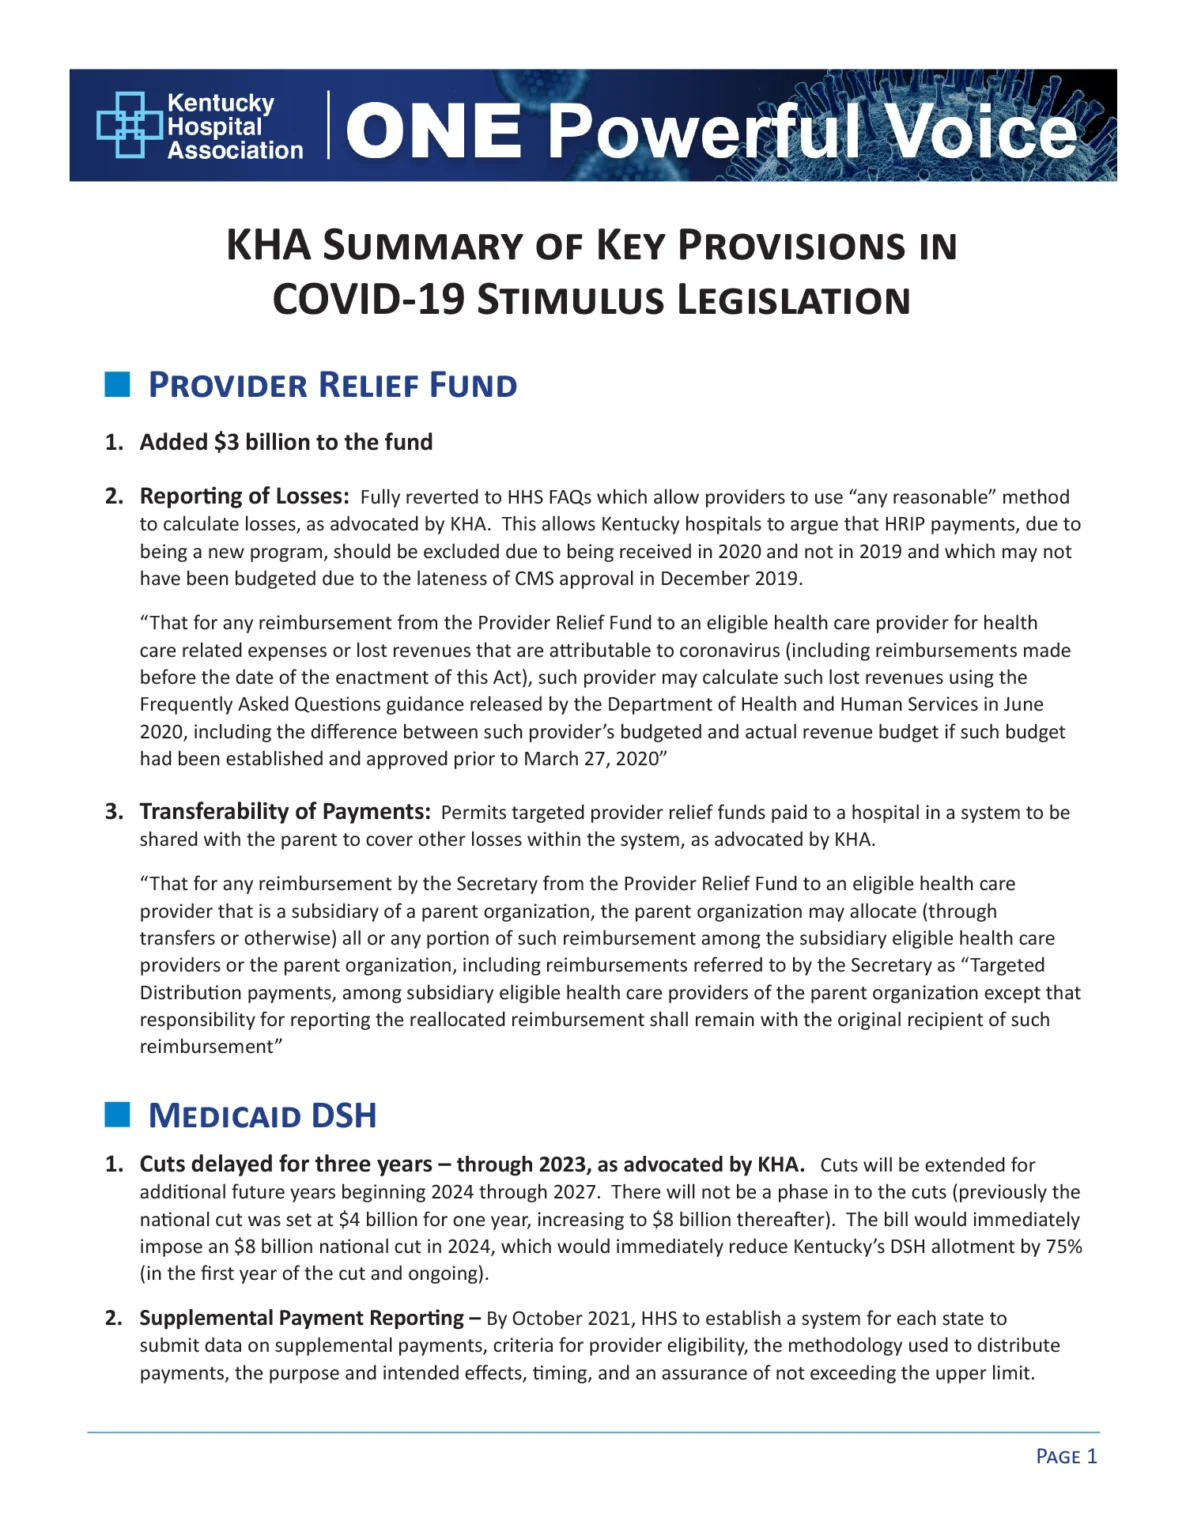 KHA Summary of Key Provisions in COVID-19 Stimulus Legislation one-sheet